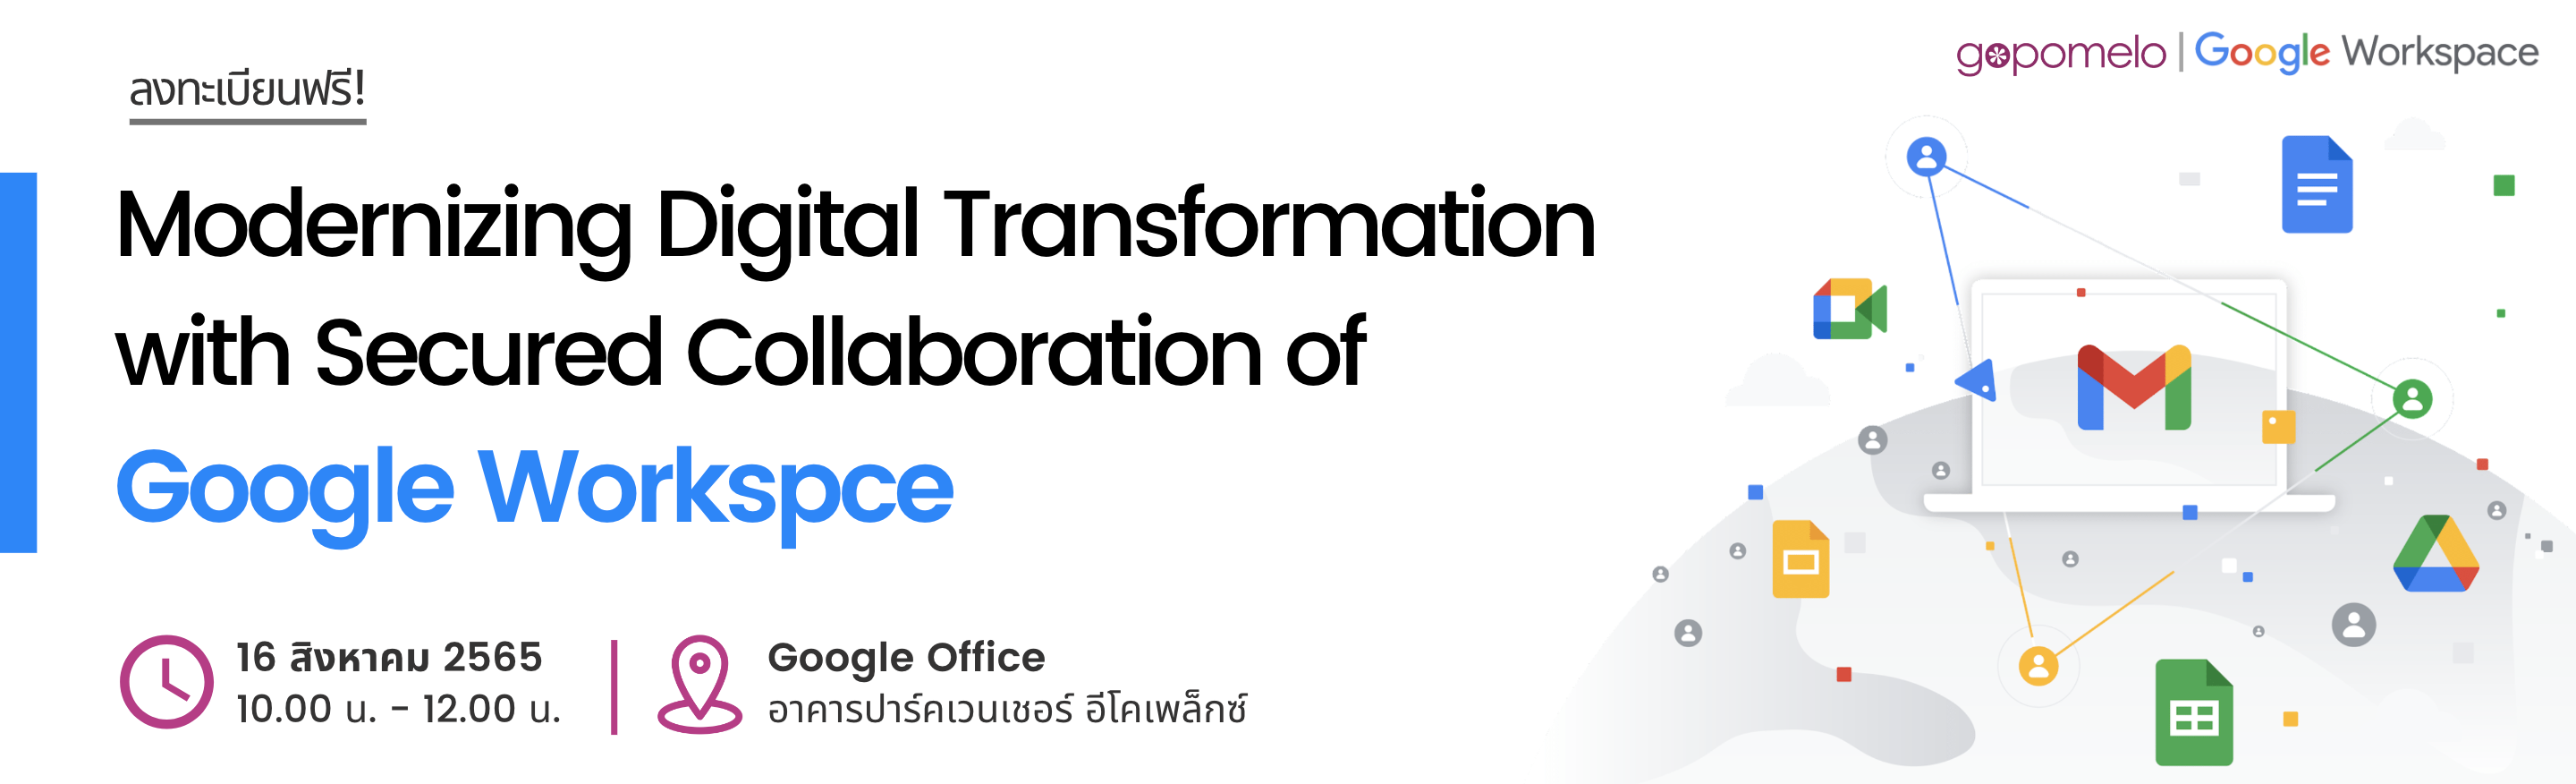 Modernizing Digital Transformation with Secured Collaboration of Google Workspace